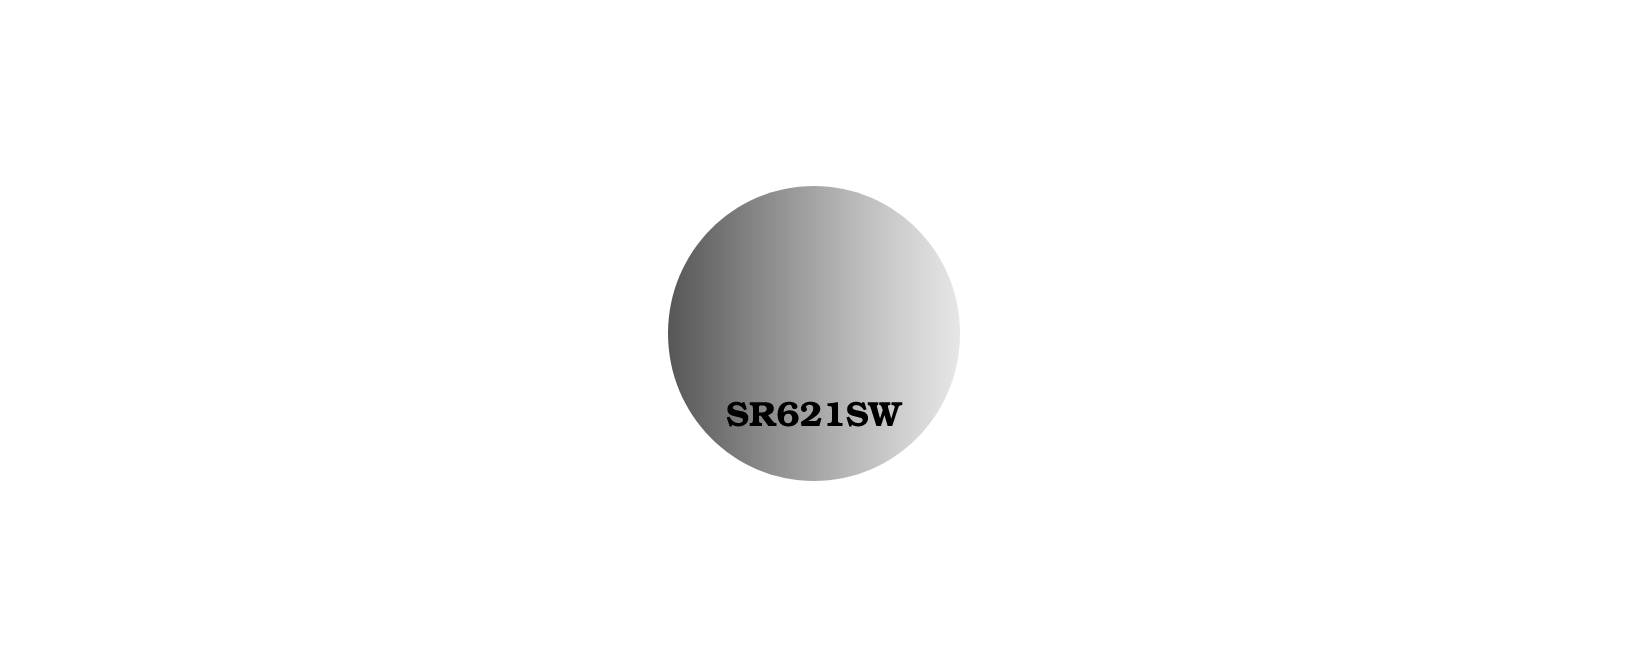 SR621SW Battery Equivalent